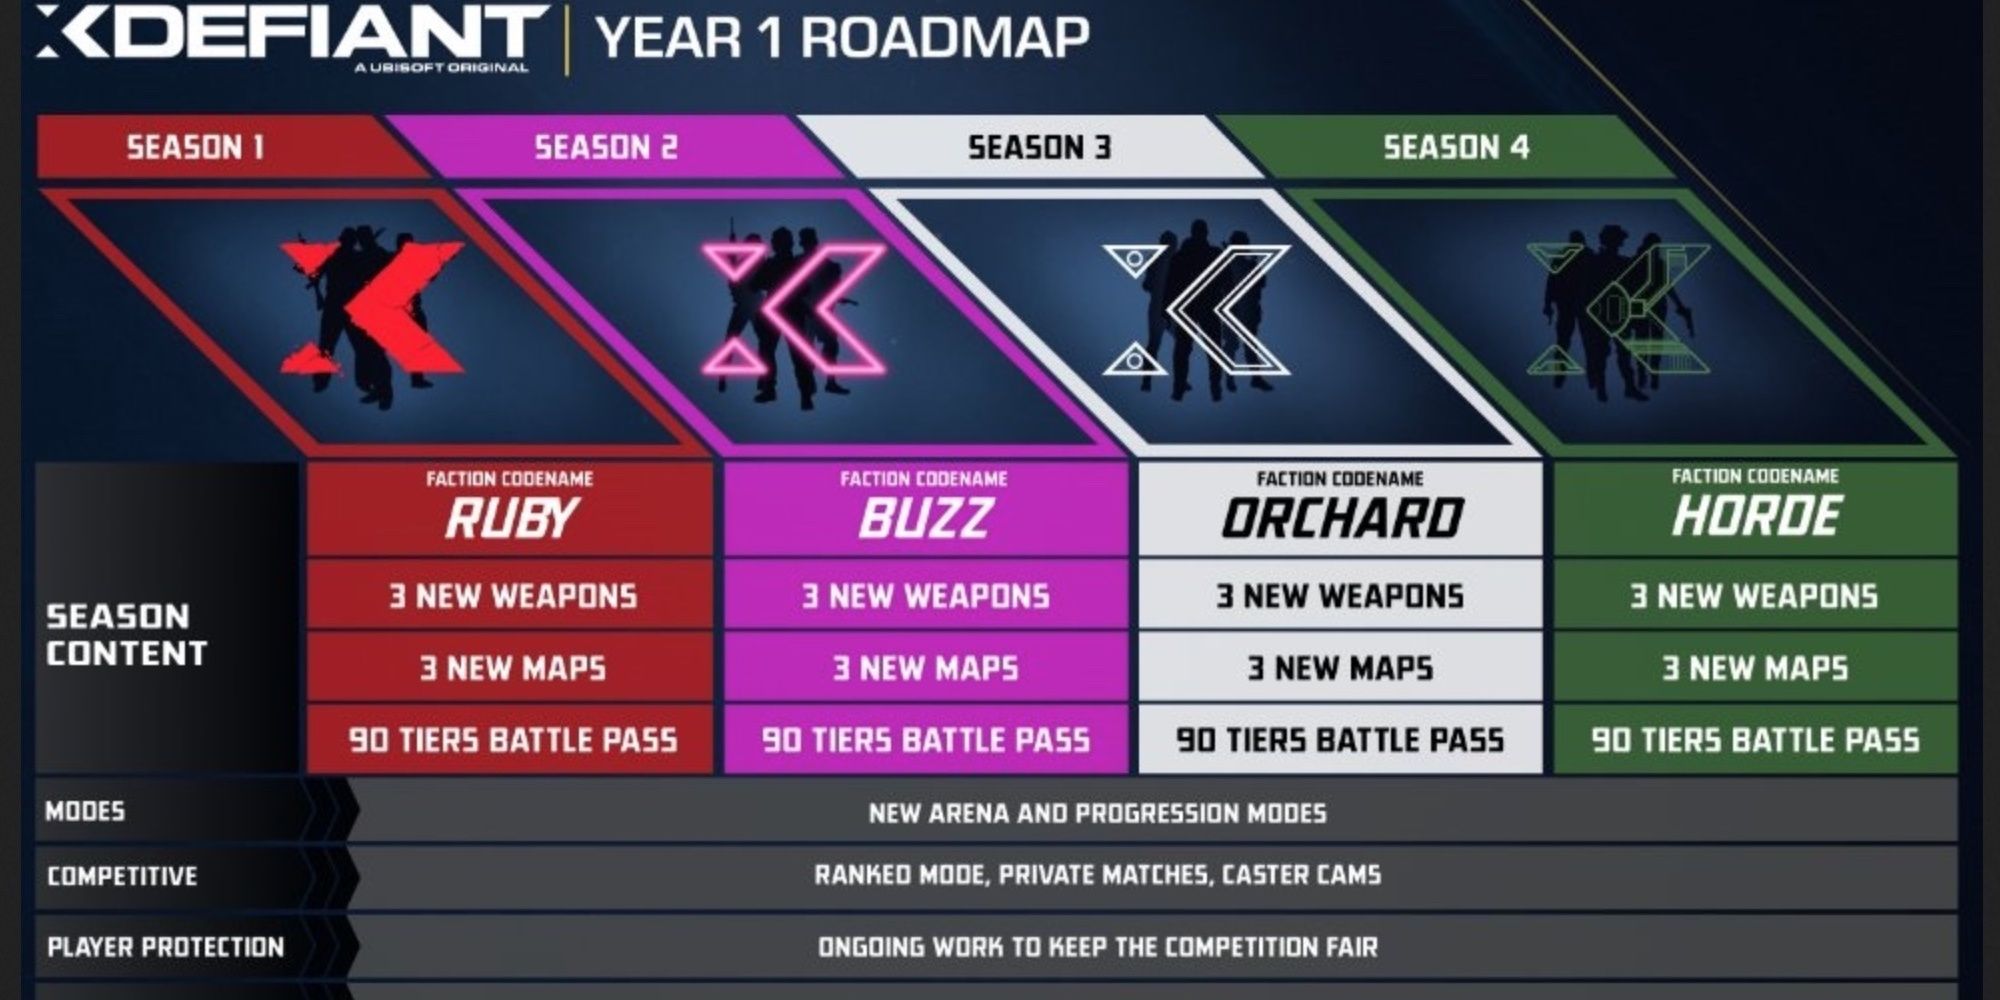 Year 1 Roadmap